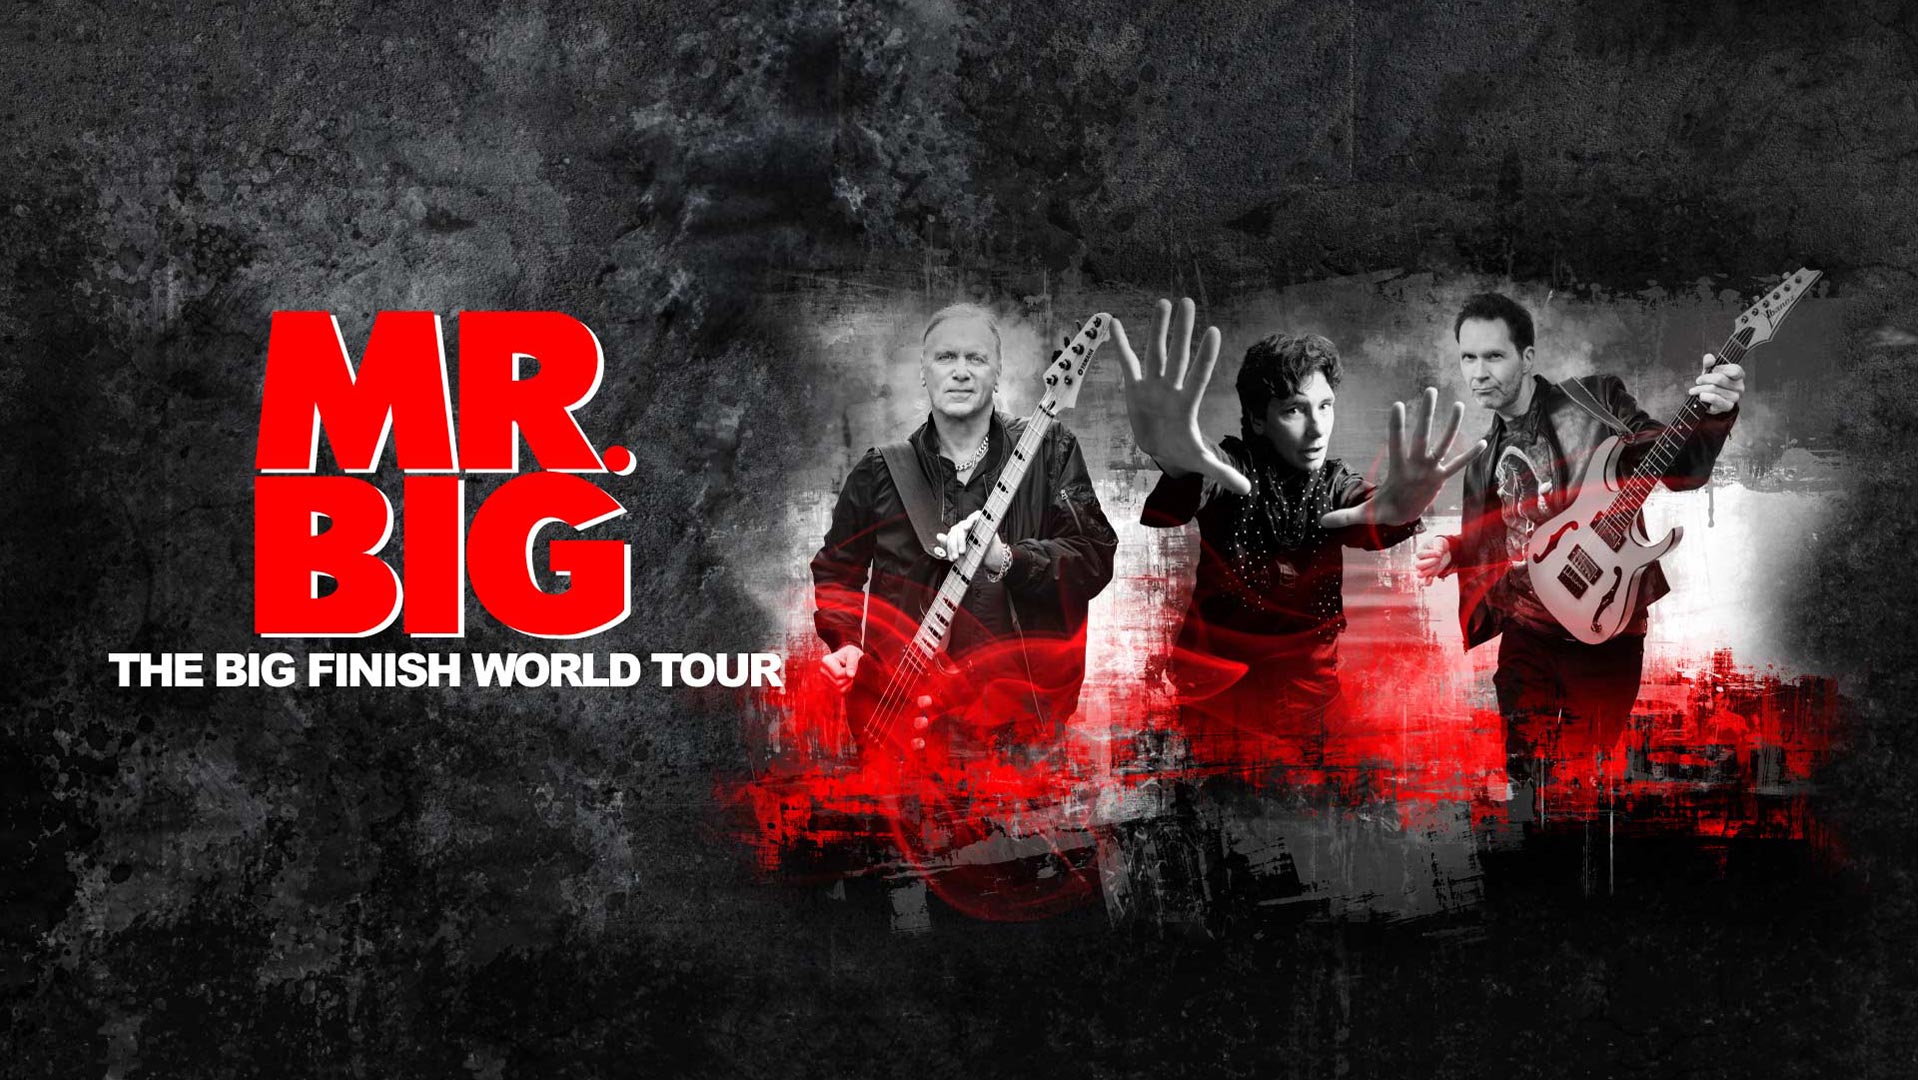 MR BIG - The Big Finish World Tour